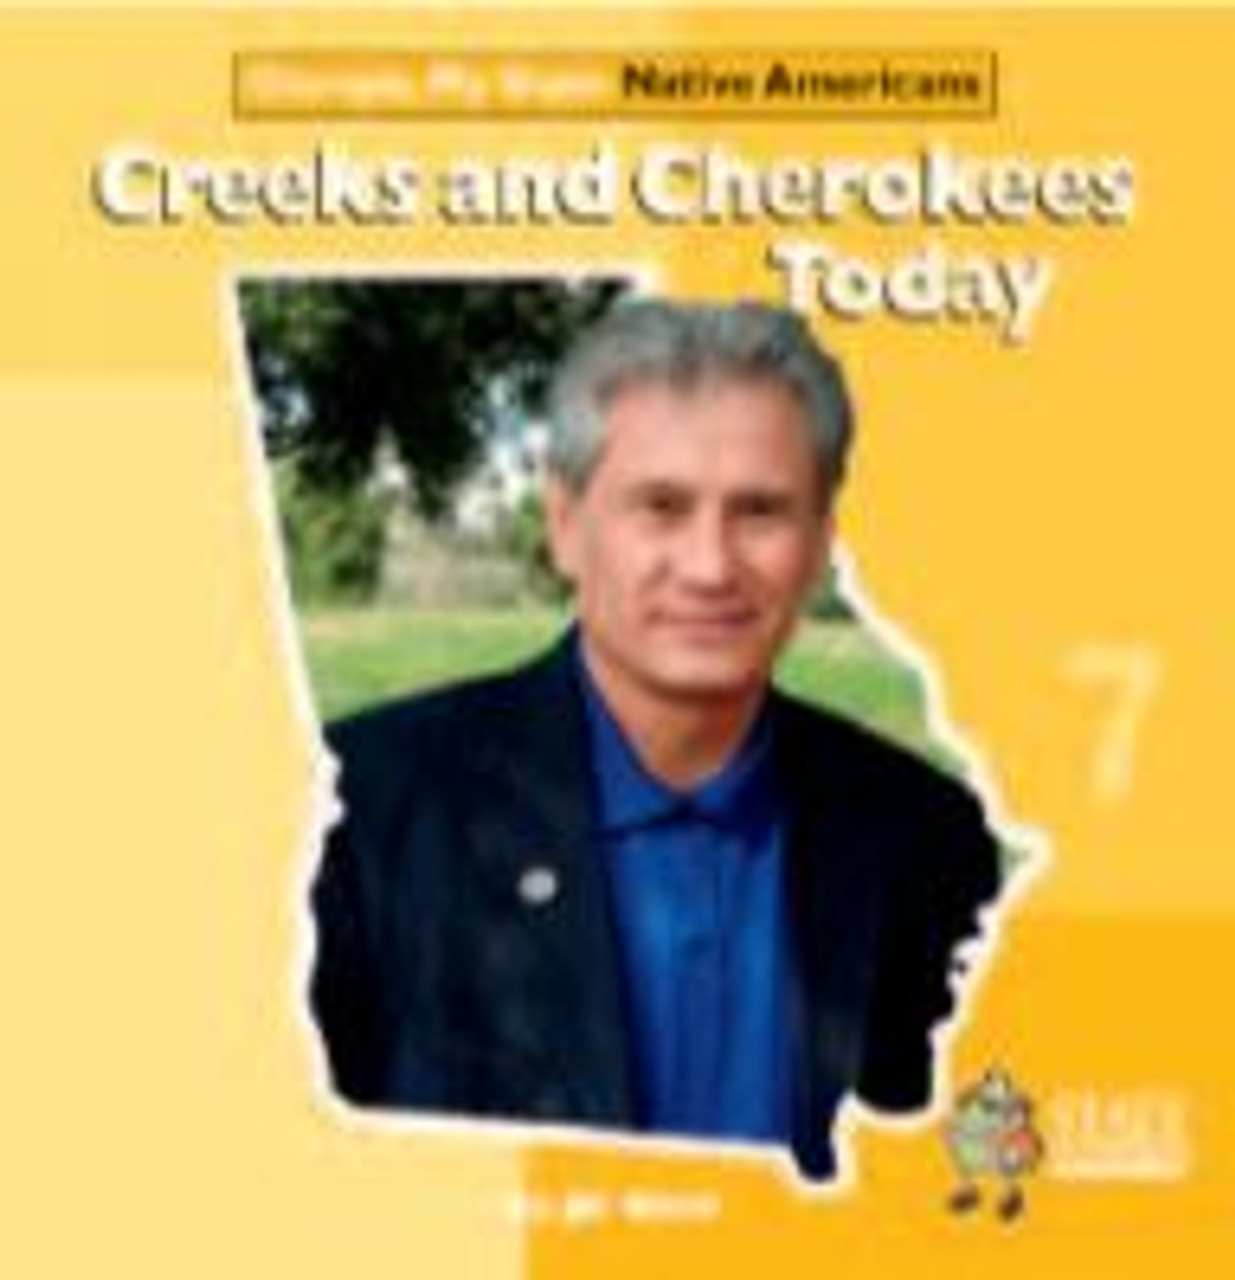 Creeks & Cherokees Today by Jill Ward